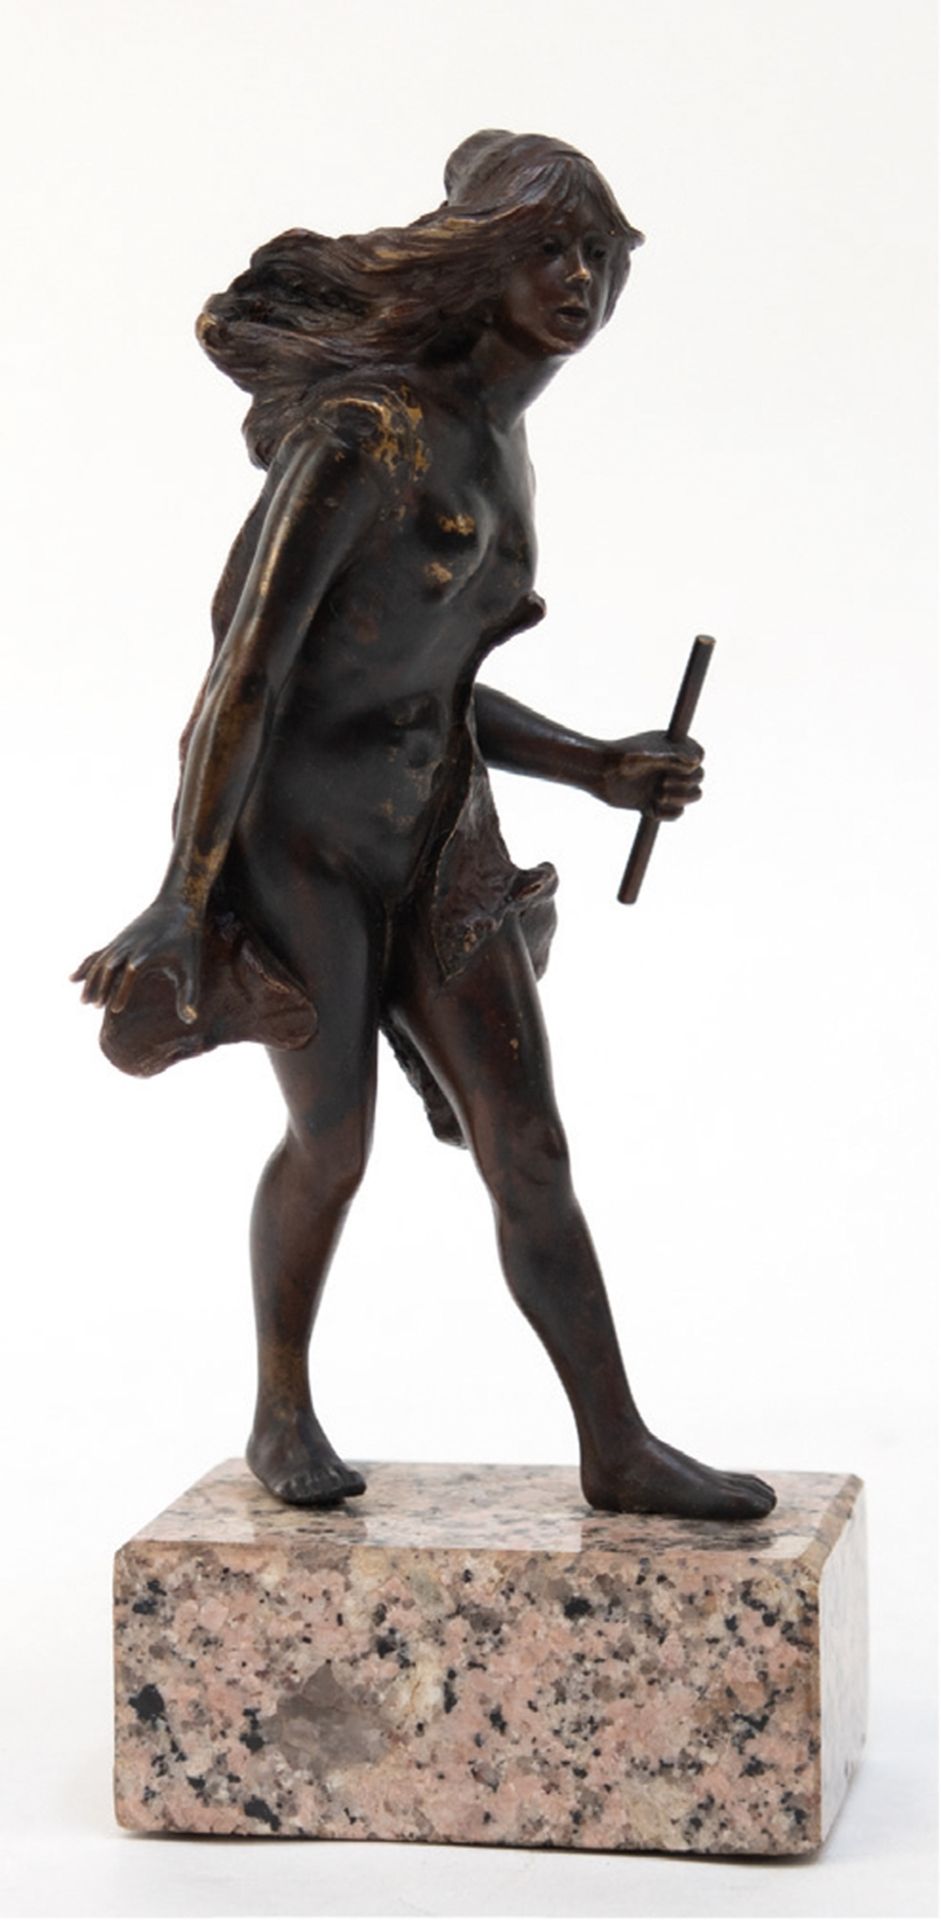 Kowalczewski, Paul Ludwig (1865- 1910) "Diana", Bronzefigur um 1900, unsigniert, braun patiniert, H